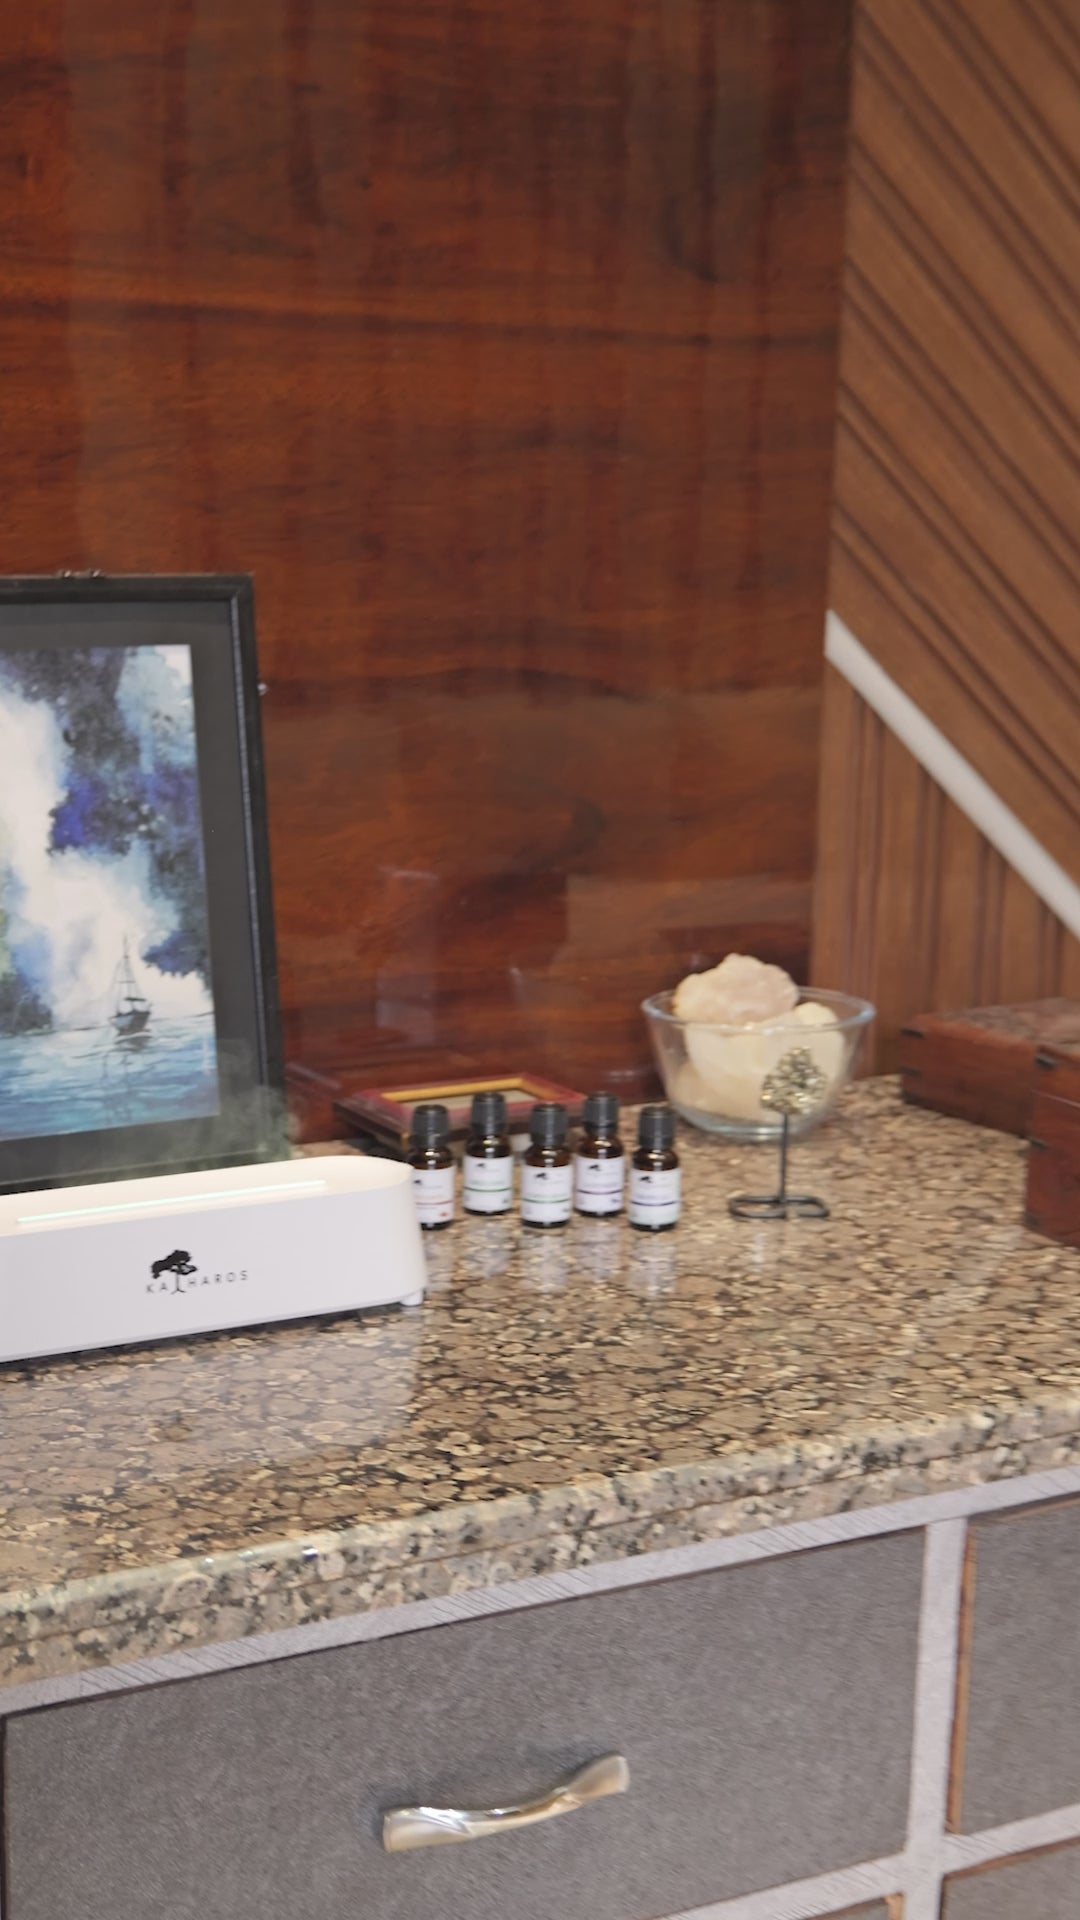 Katharos Flames Aroma Sleek Humidifier | Get 2x Complimentary Fragrance Oils Free